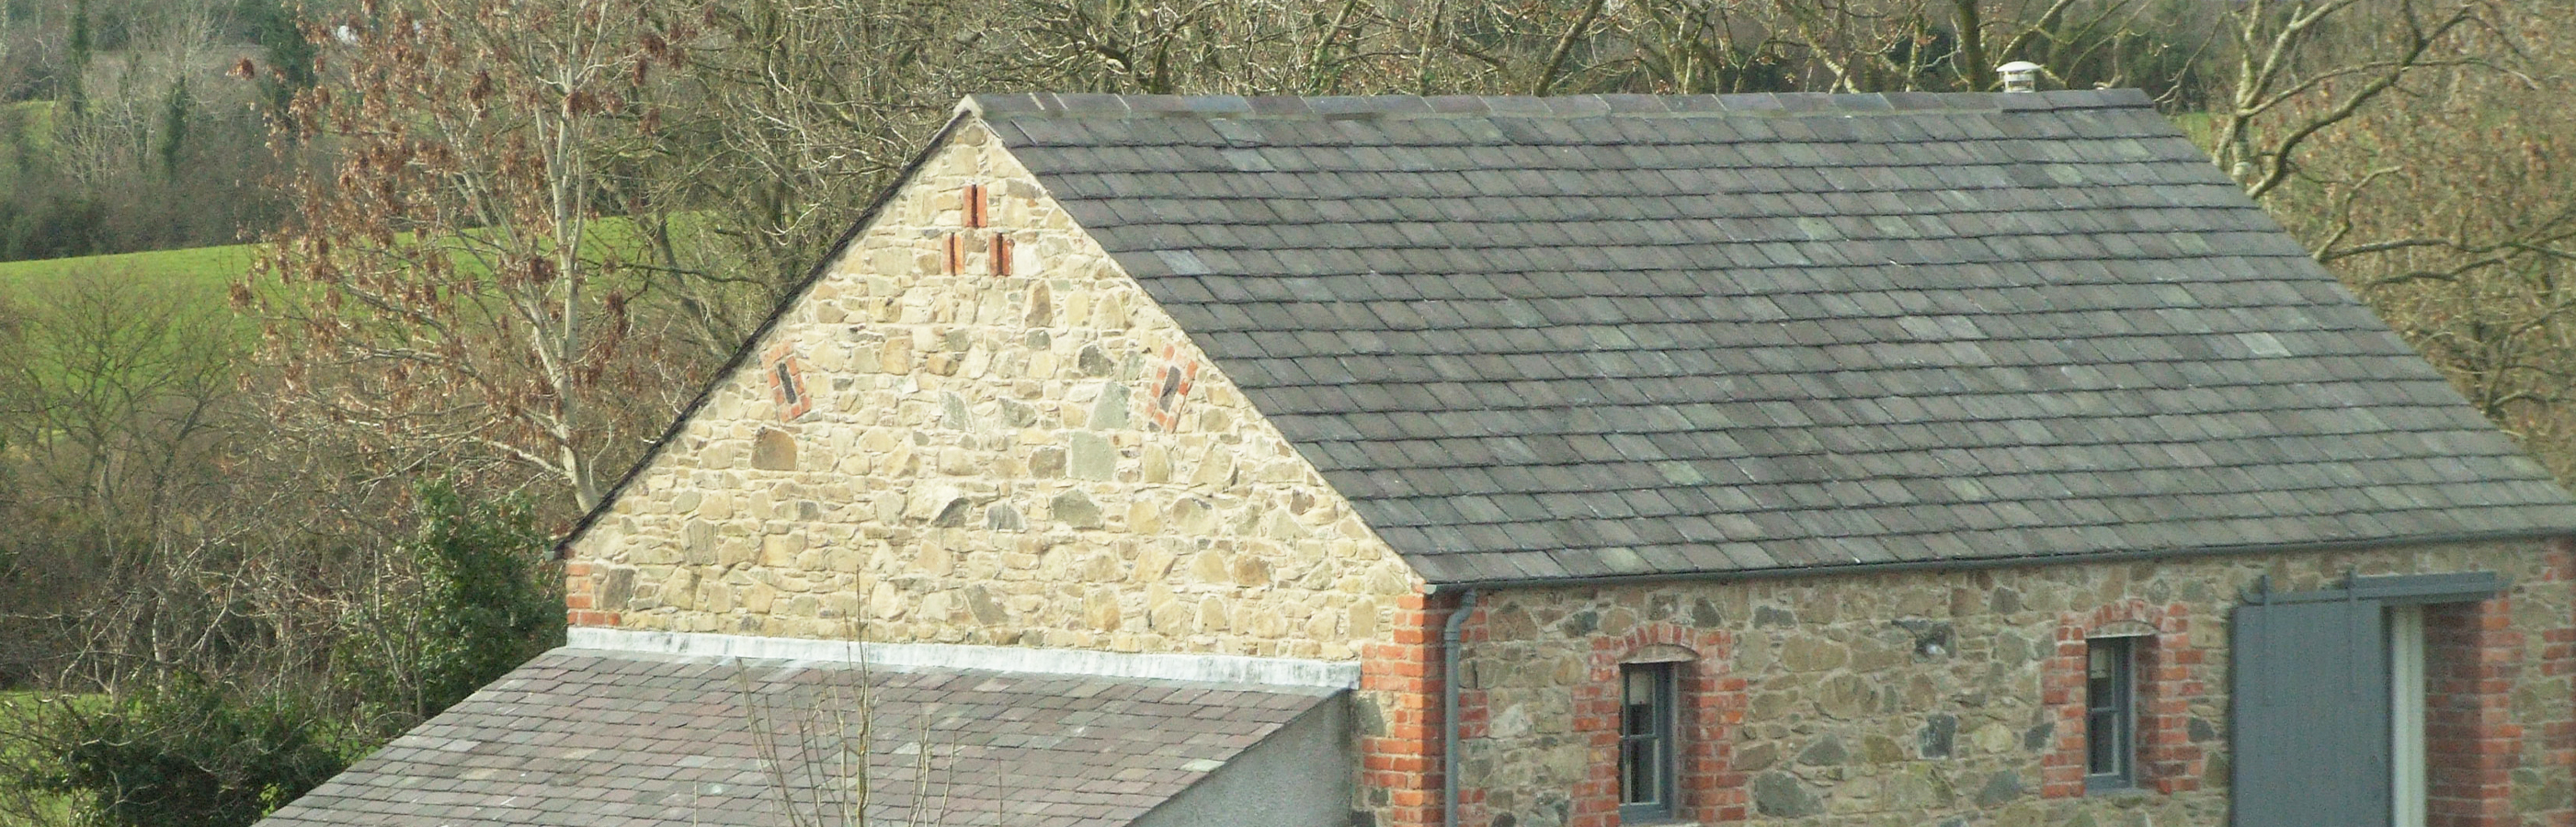 Reclaimed Roof Slates Welsh 16x12 ONLY 1.10 each slate